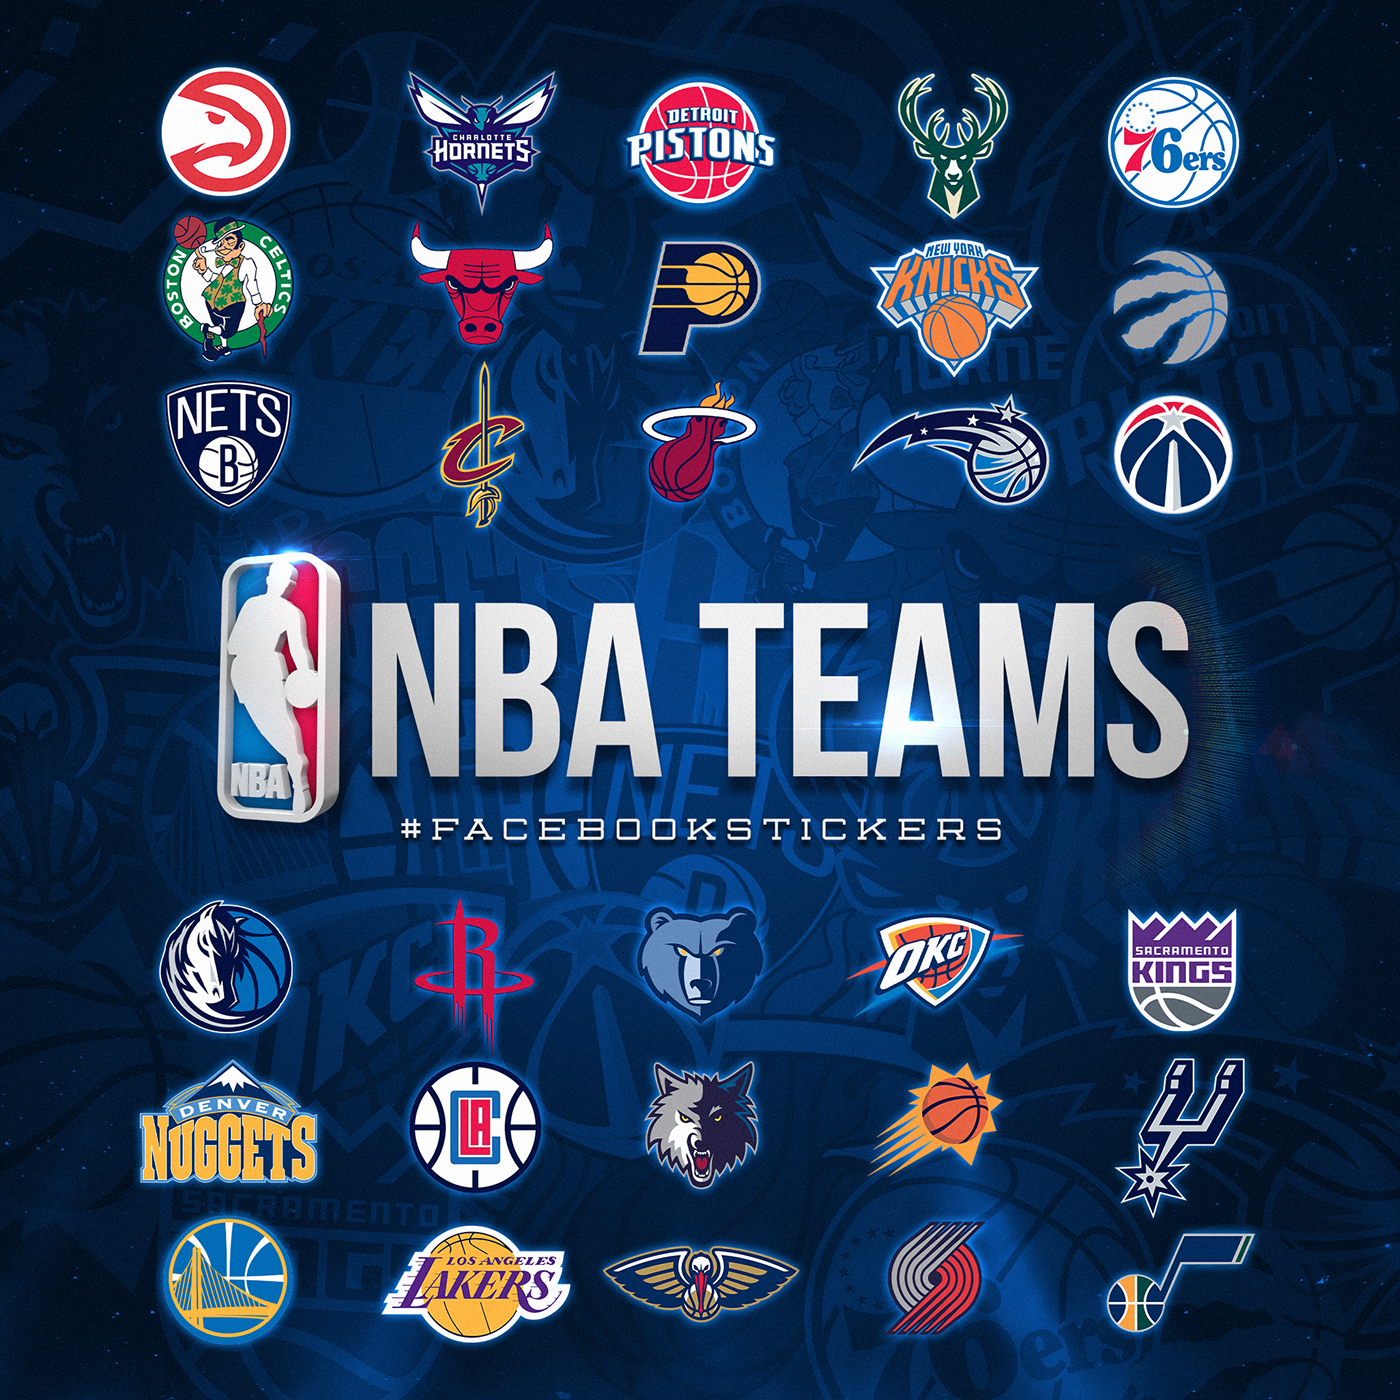 NBA social media basketball Cleveland Cavaliers warriors steph curry LeBron James WNBA Westbrook sports